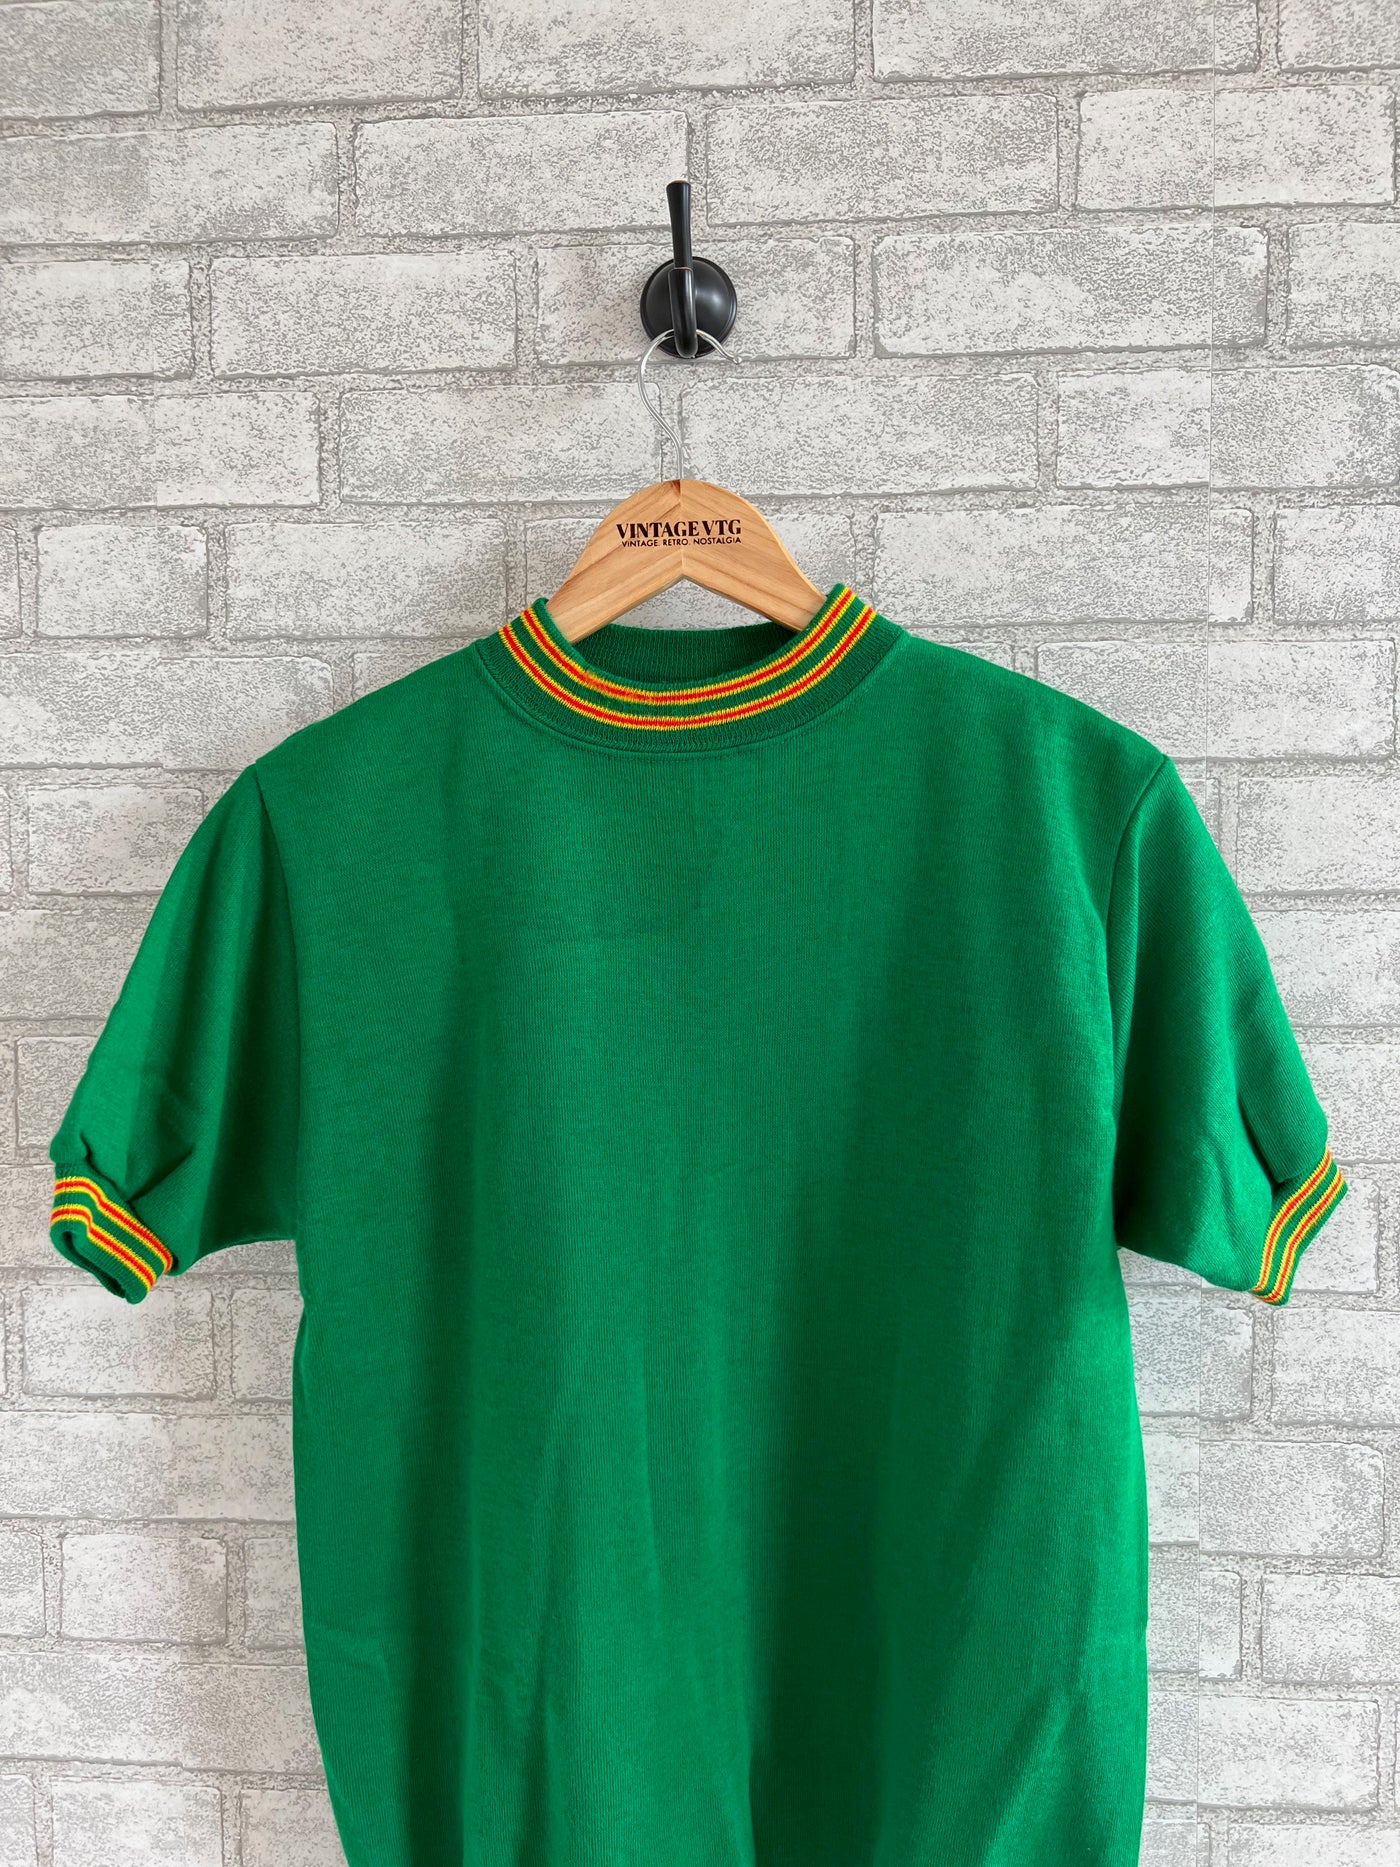 Vintage 1960s Mens Casuals of Creslan Green Acrylic Short Sleeve Sweater